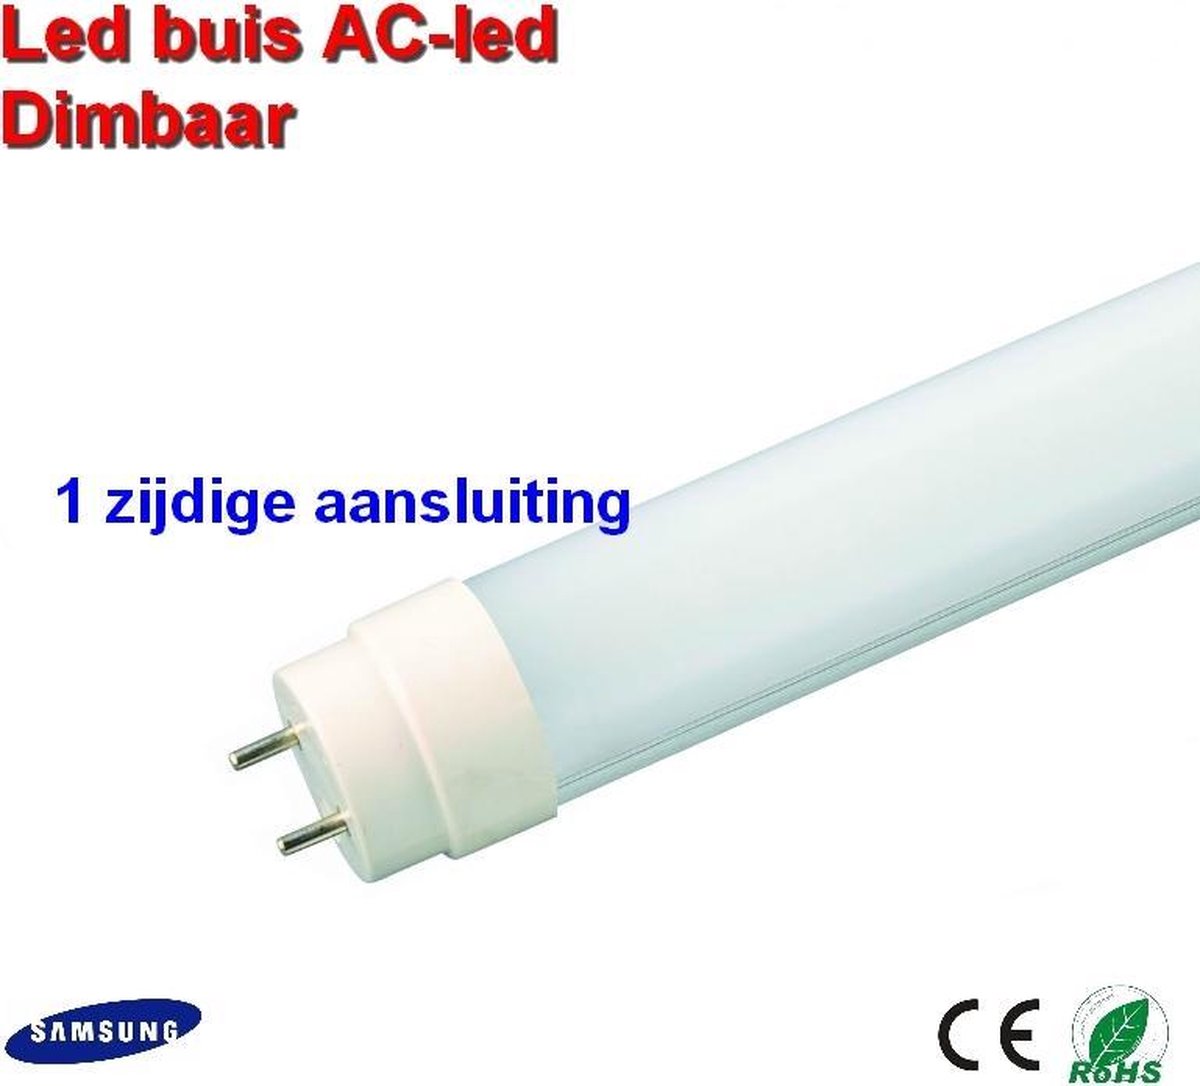 LED TL buis 120cm AC led Dimbaar Warm-wit - 1 zijdige aansluiting | bol.com